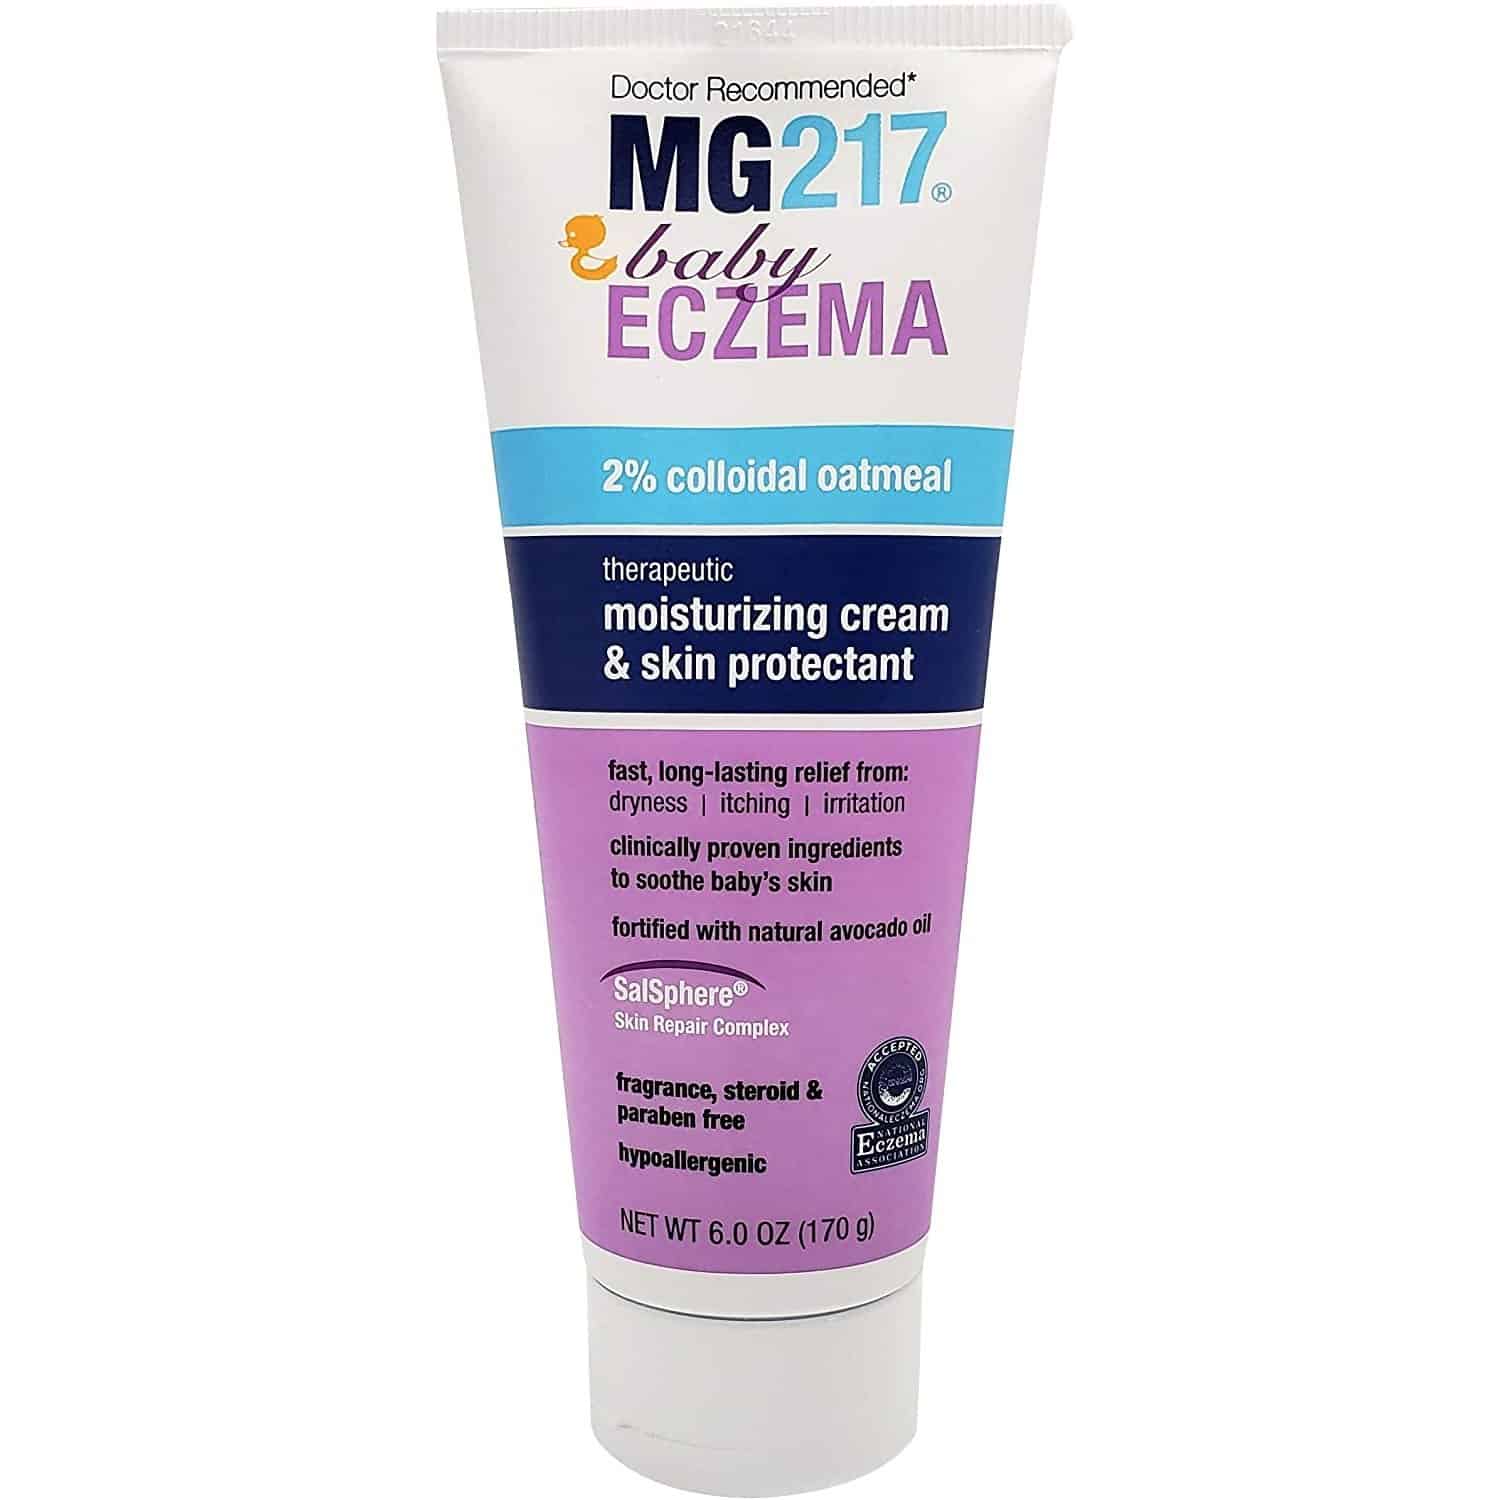 mg217 eczema baby therapeutic moisturizing cream & skin protectant